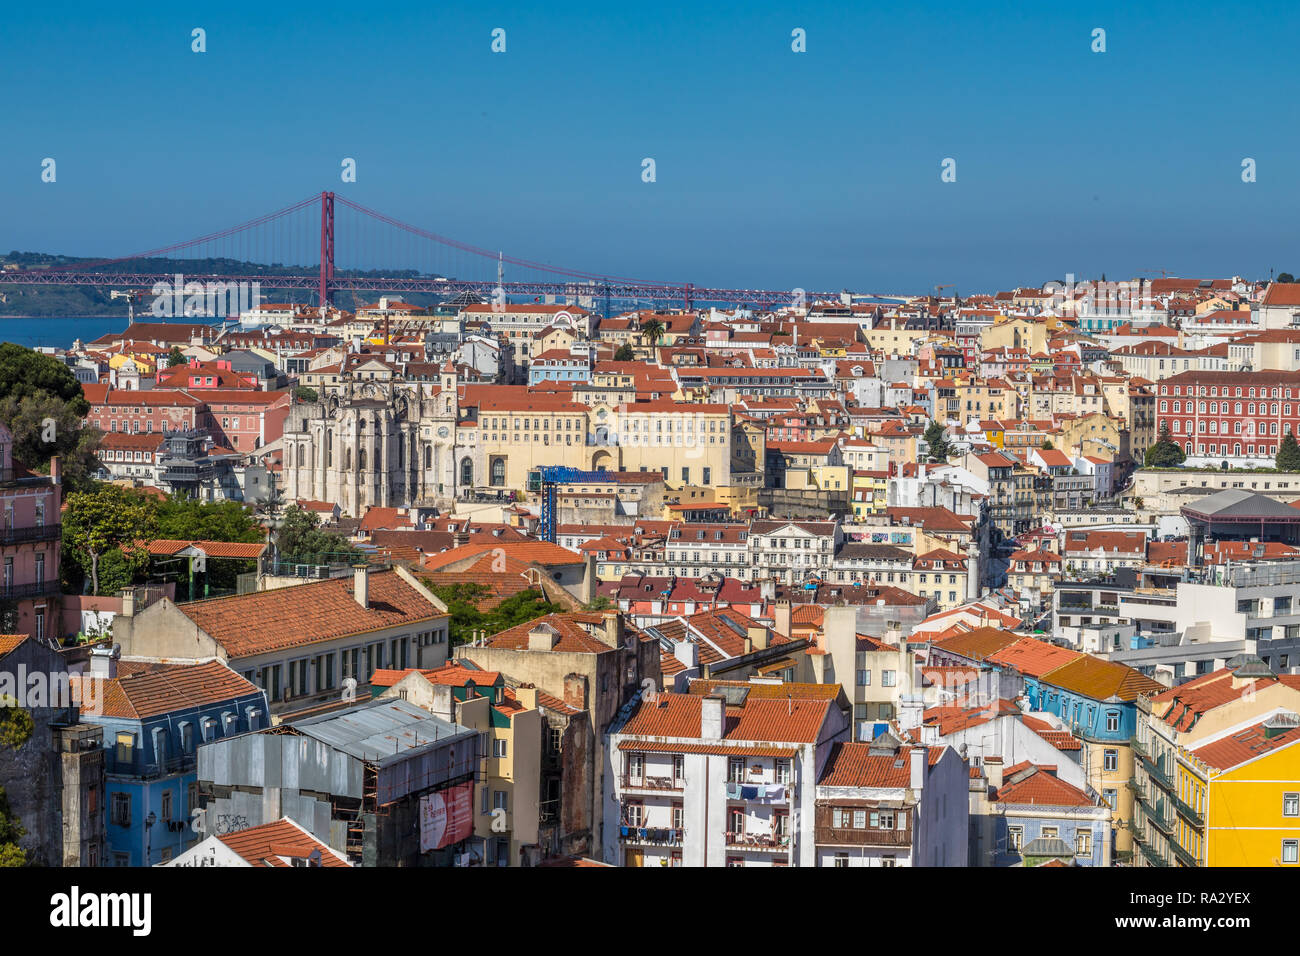 Nice view of Lisbon Stock Photo